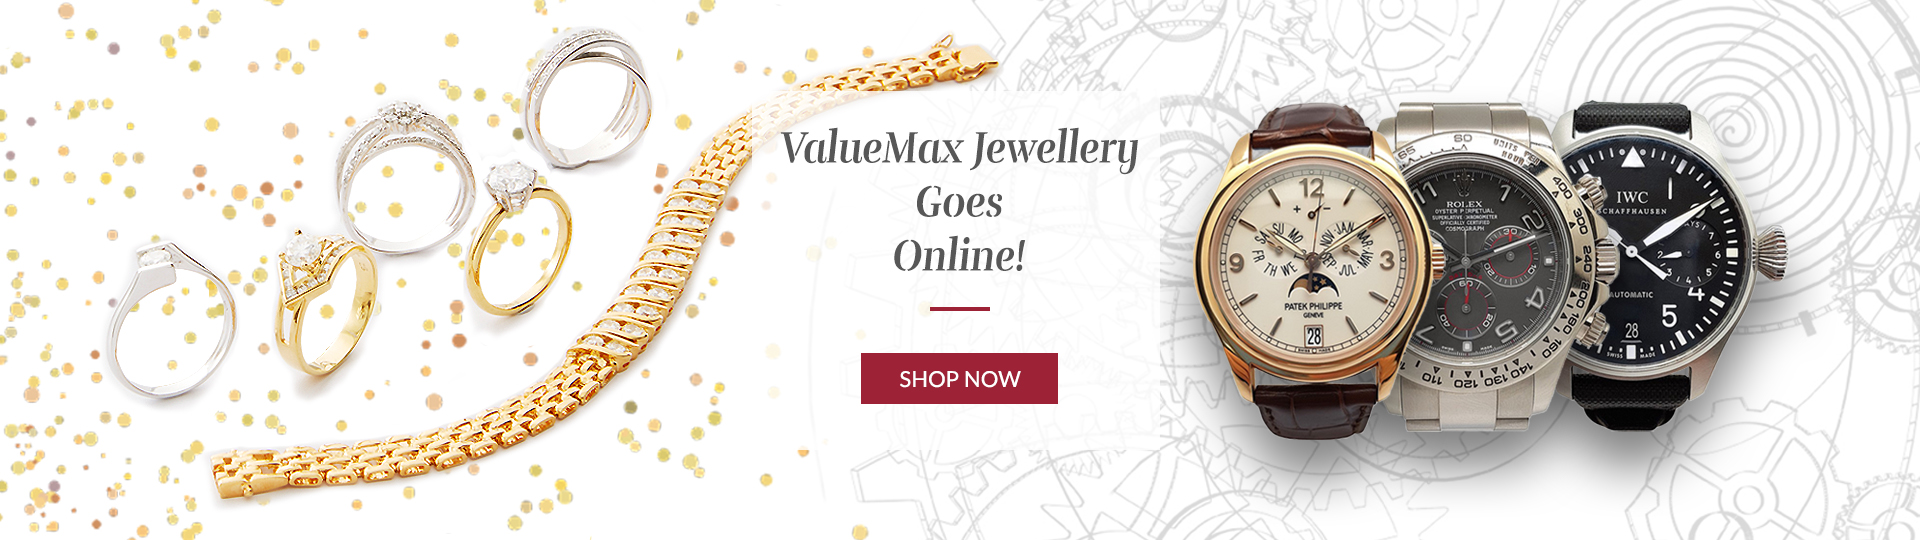 jewelry & timepiece online shop valuemax